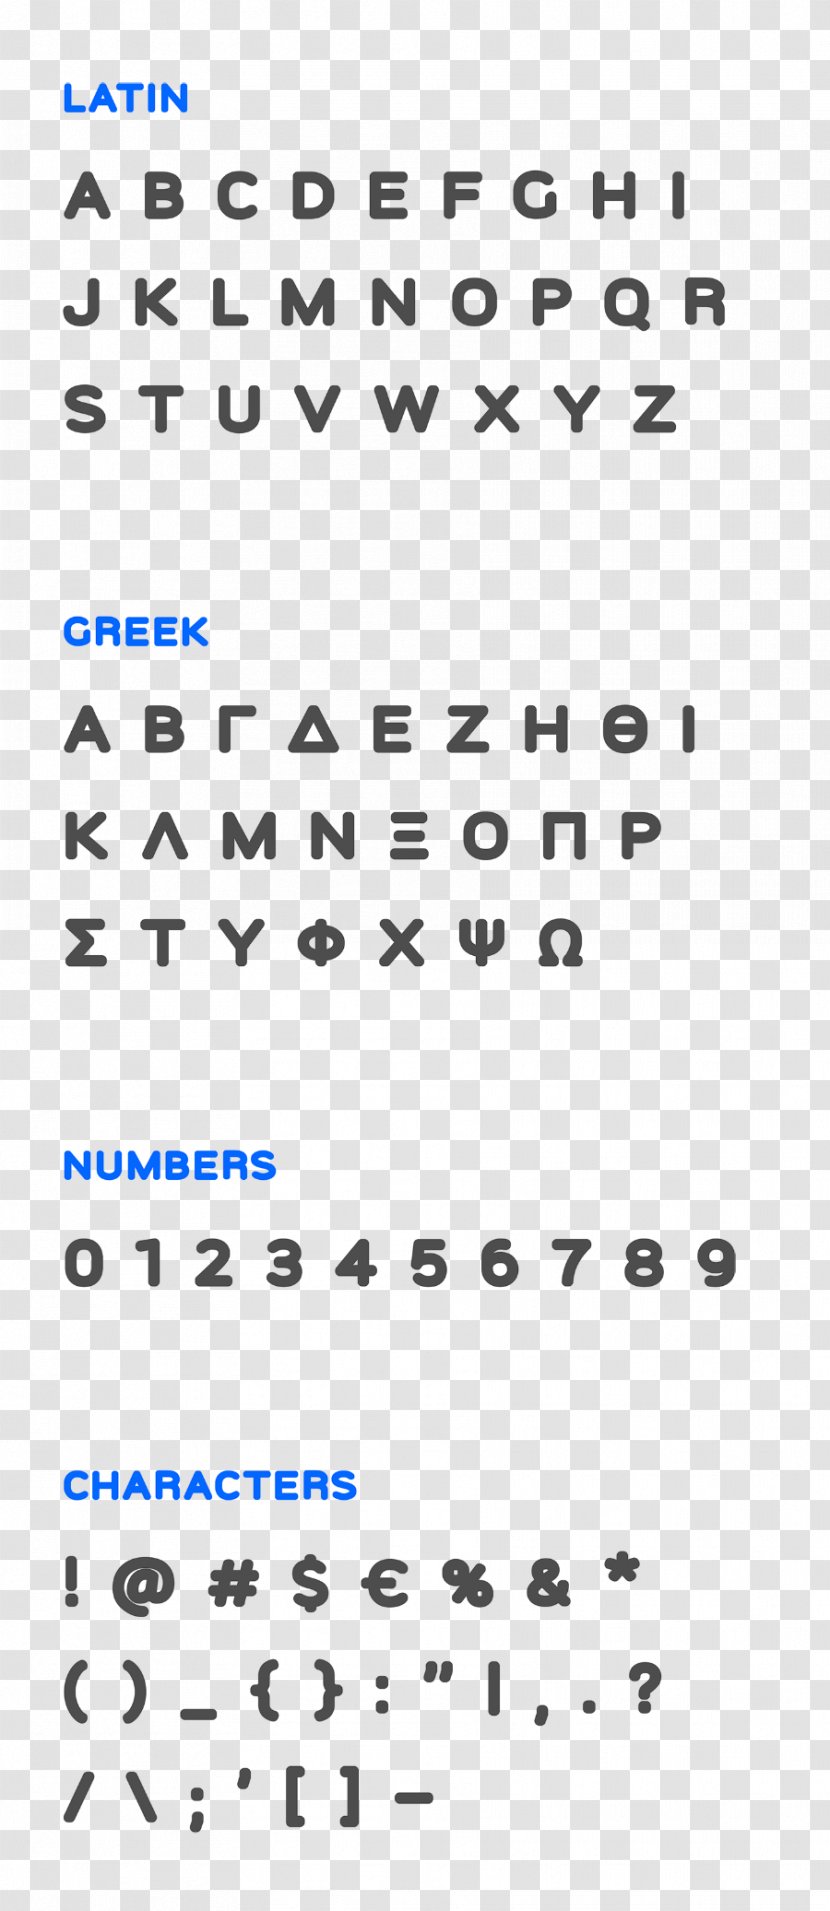 Number Area Packaging And Labeling Material Font - Lucida Sans Unicode Typeface Sans-serif Transparent PNG